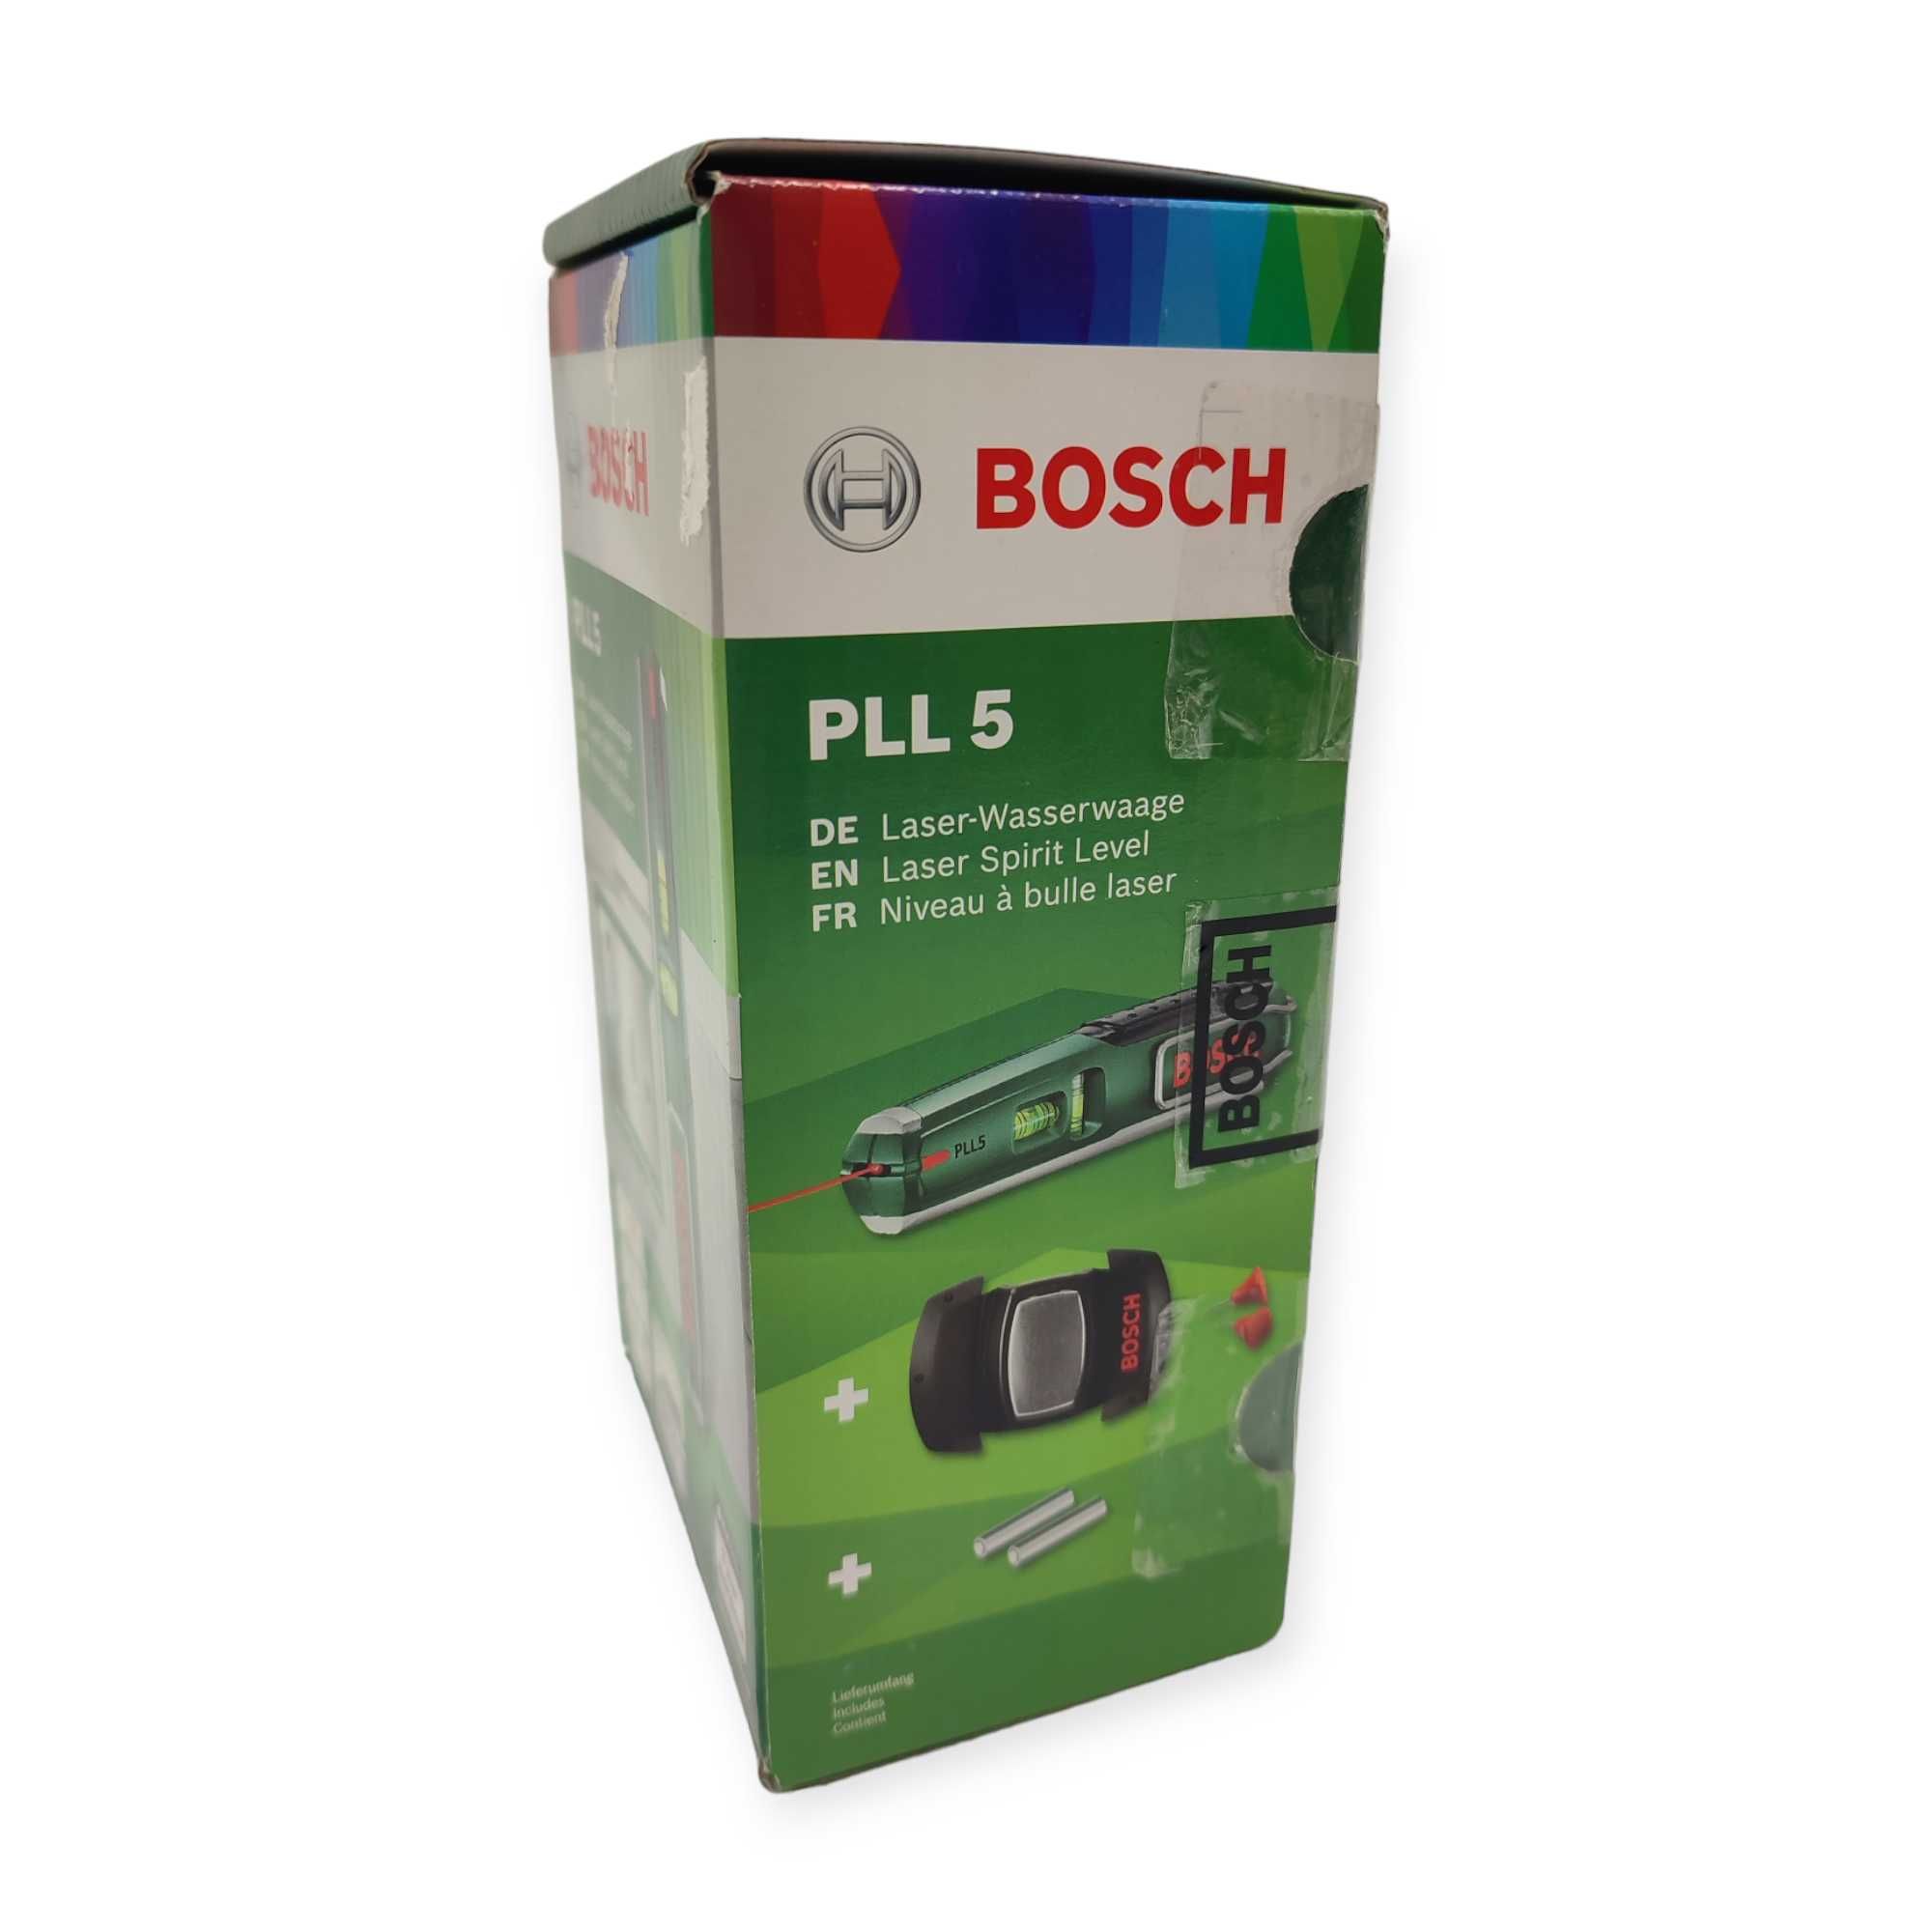 Poziomica LASEROWA Bosch 0,01 m PLL5